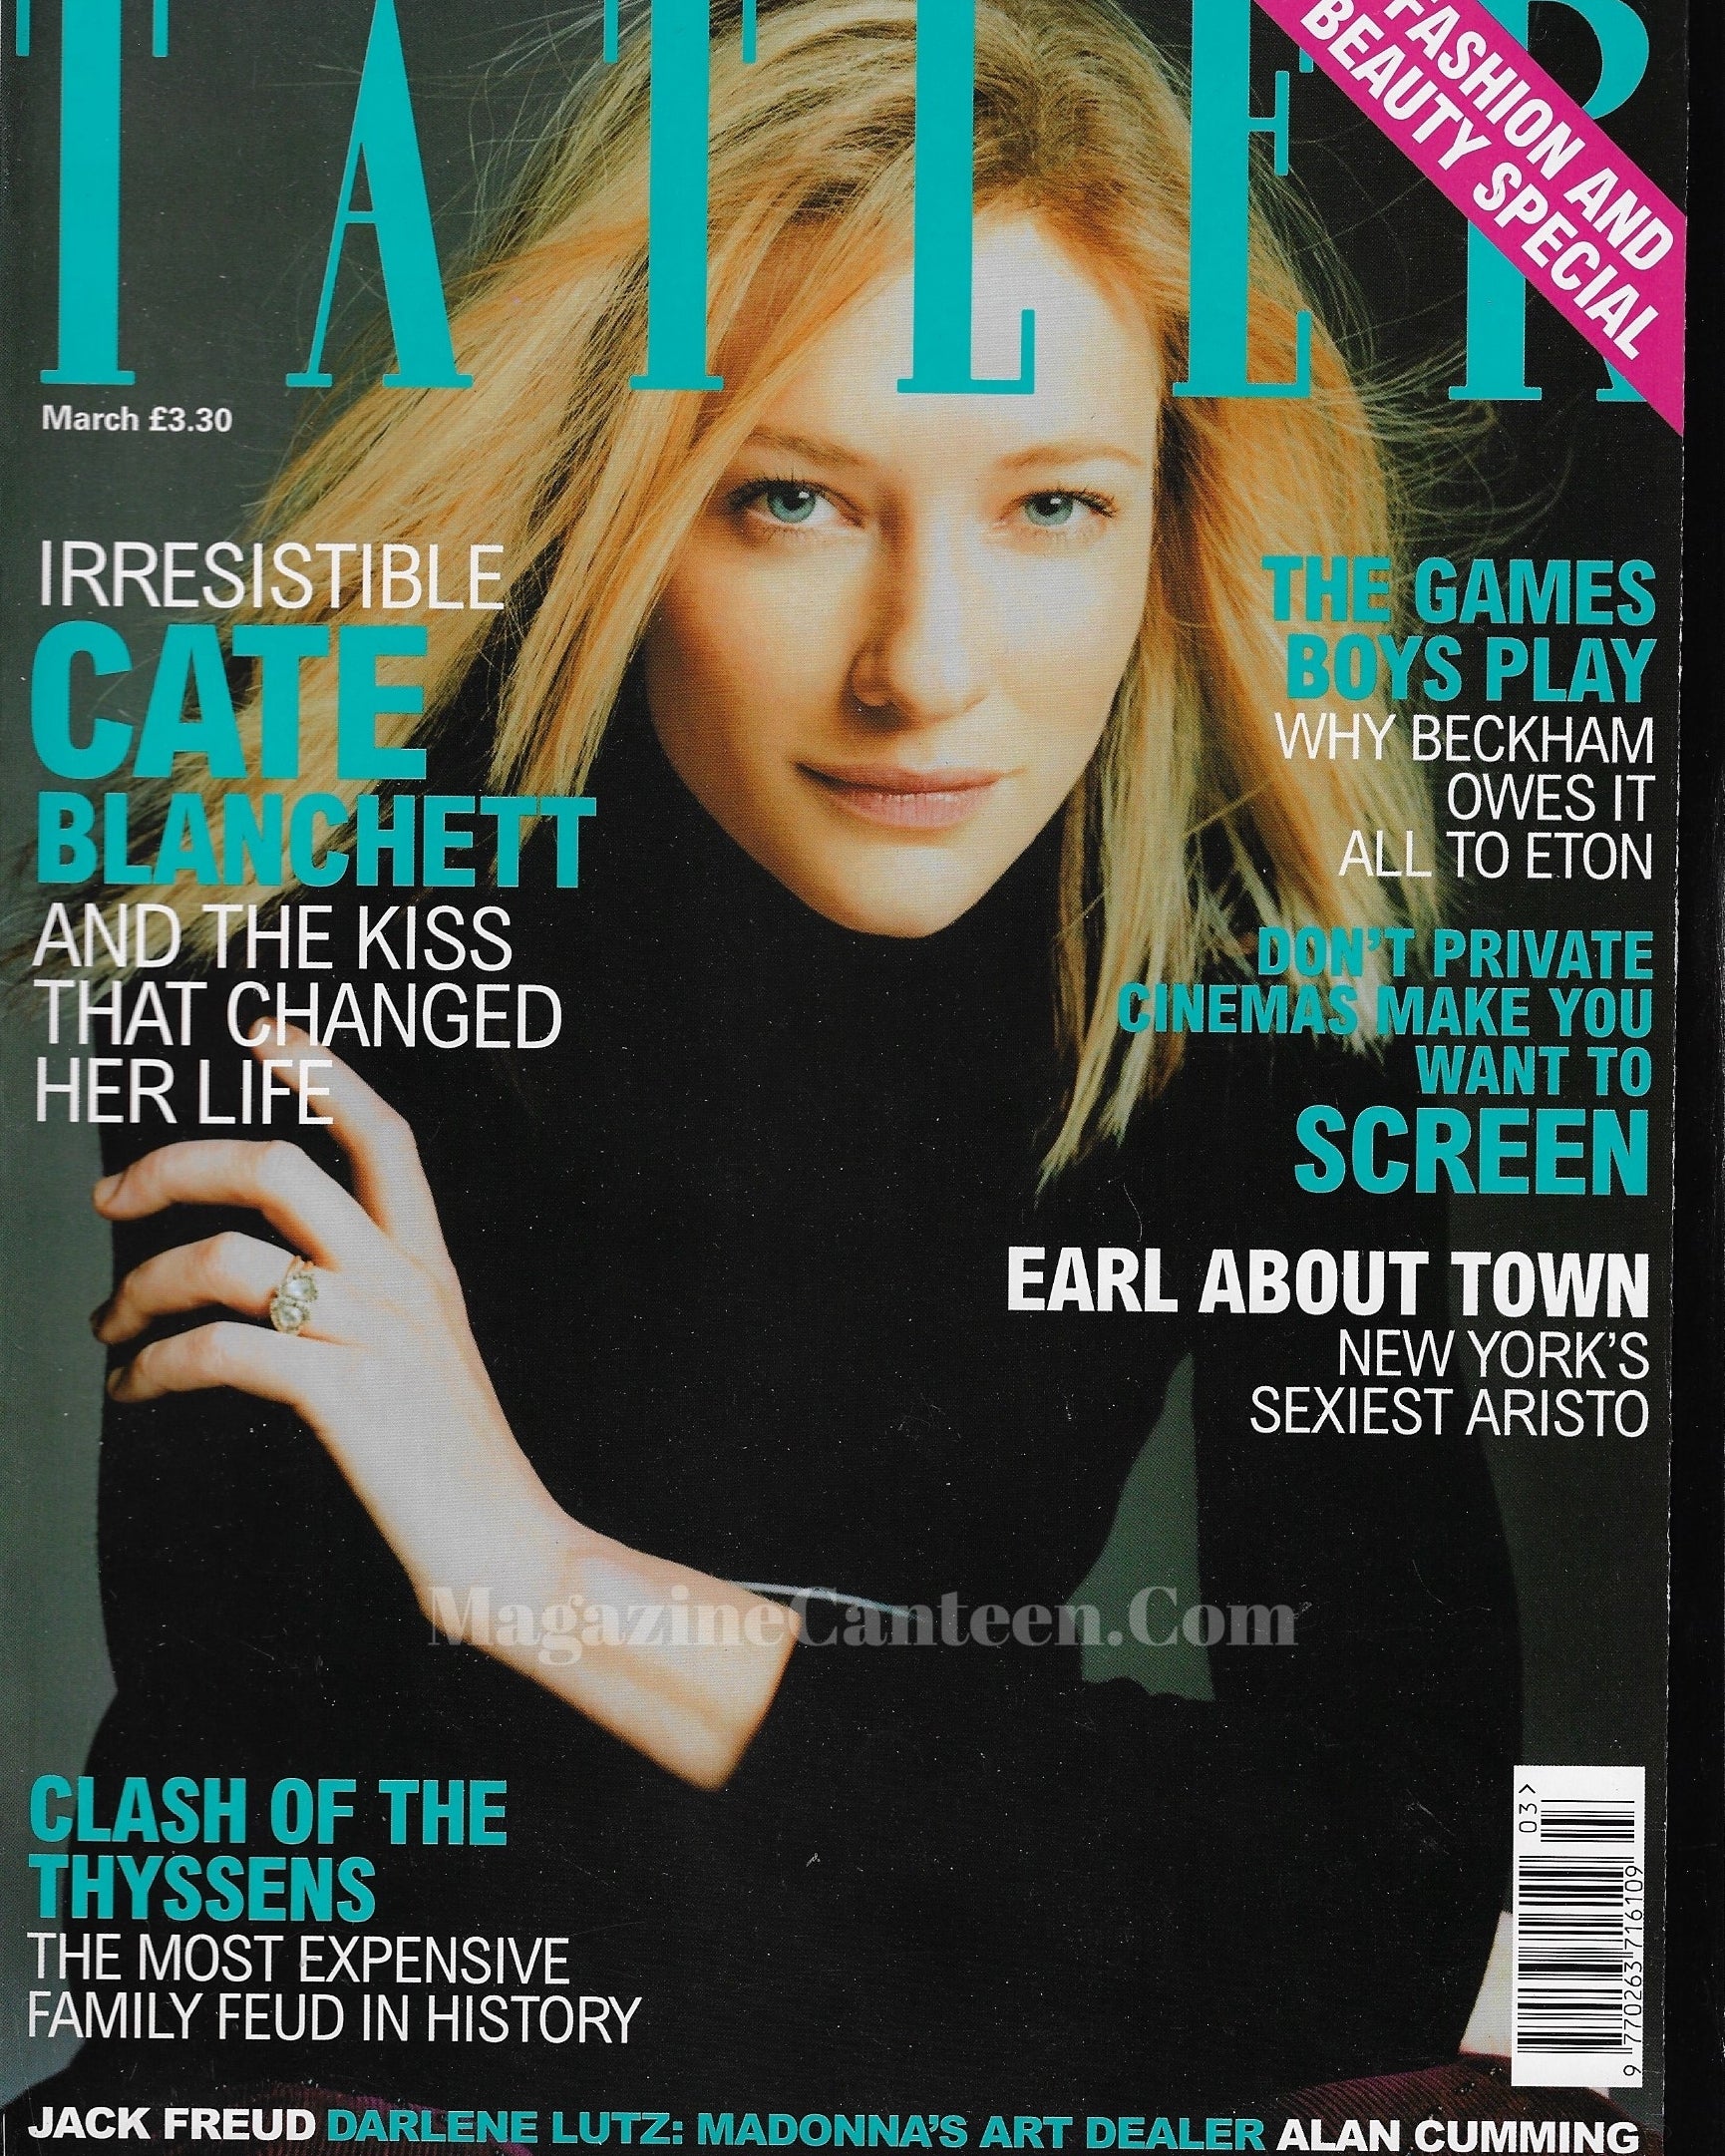 Tatler Magazine - Cate Blanchett